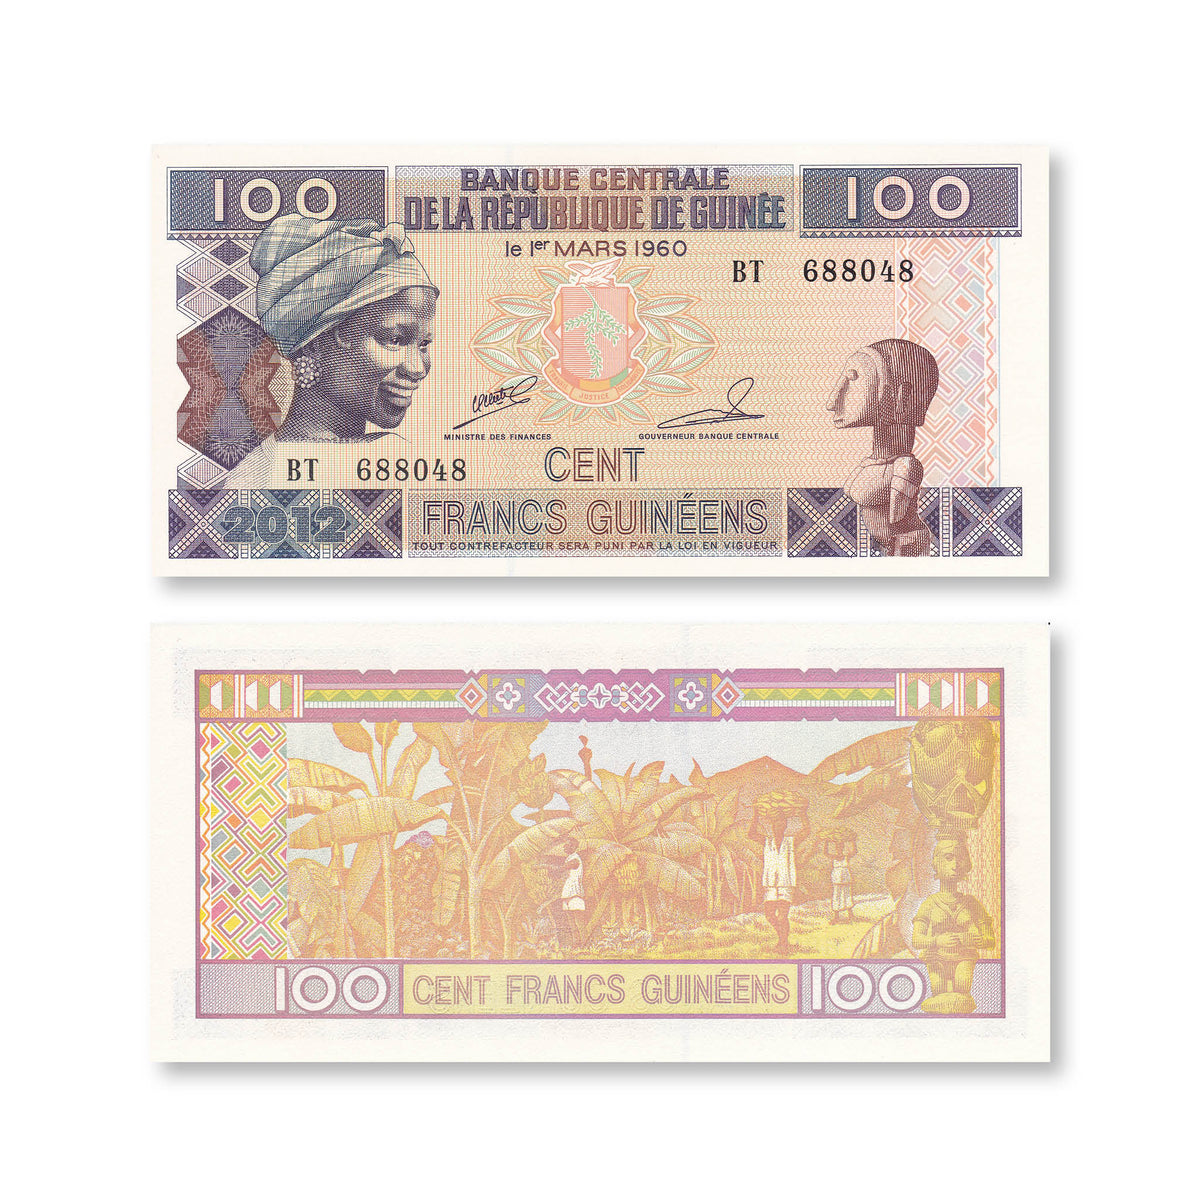 Guinea 100 Francs, 2012, B324c, P35b, UNC - Robert's World Money - World Banknotes